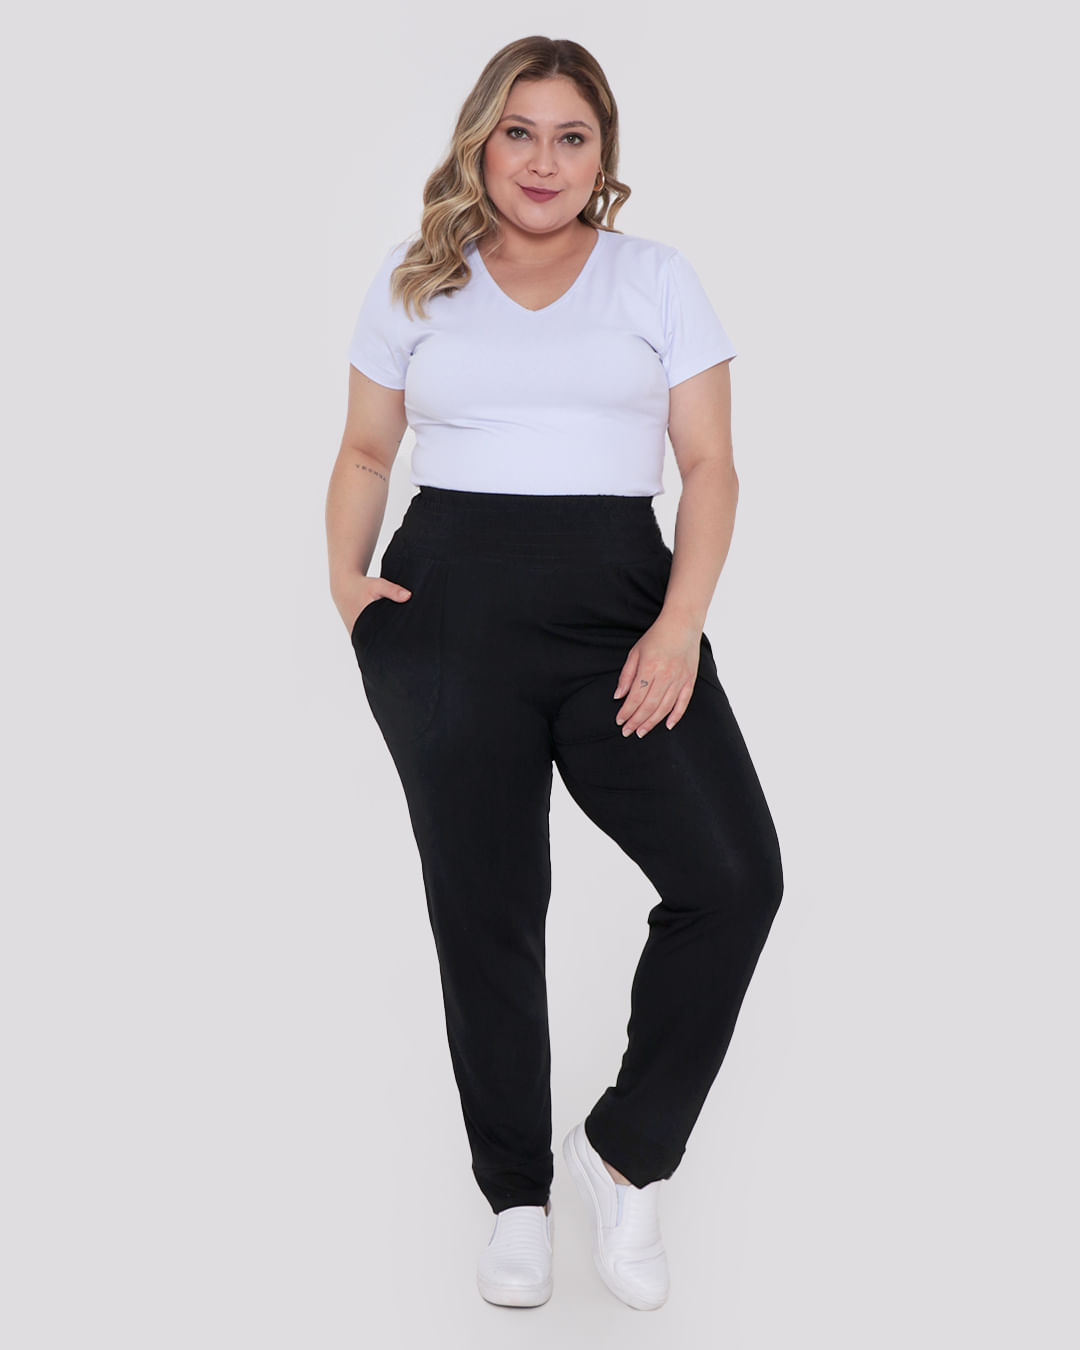 Blusa Feminina Plus Size Básica Decote V Branca